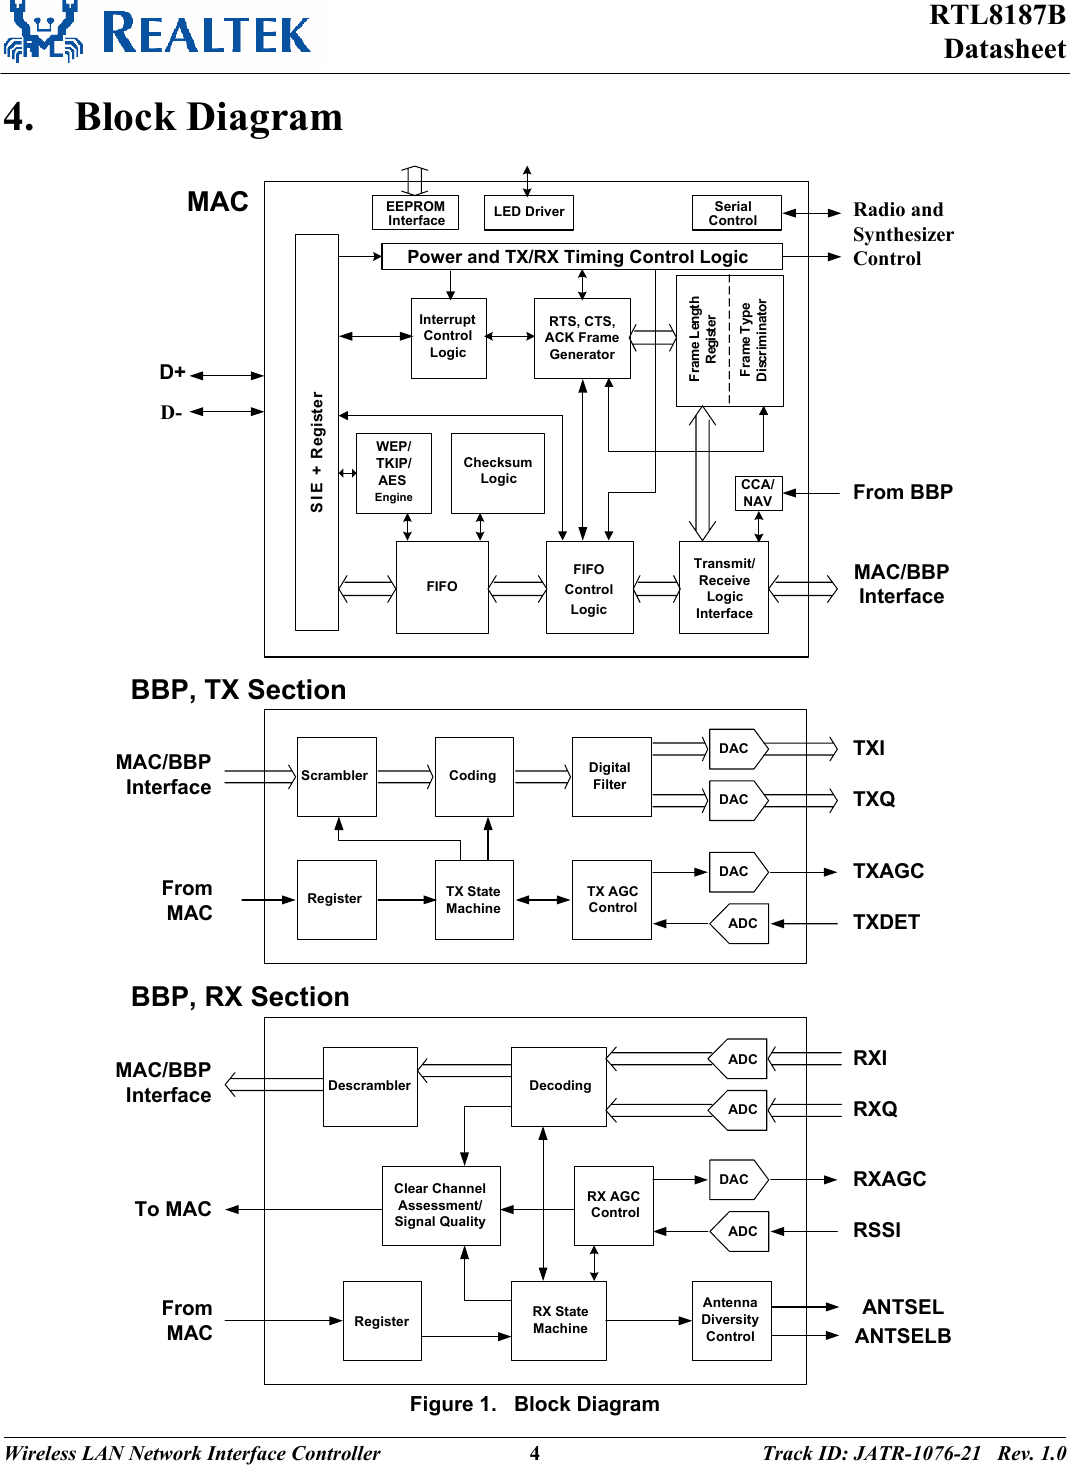 RTL8187B Datasheet Wireless LAN Network Interface Controller  4 Track ID: JATR-1076-21   Rev. 1.0  4. Block Diagram MAC/BBPInterfaceInterruptControlLogicFIFOTransmit/ReceiveLogicInterfaceRTS, CTS,ACK FrameGeneratorFIFOControlLogicFrame TypeDiscriminatorPower and TX/RX Timing Control LogicSIE + RegisterFrame LengthRegisterEEPROMInterface LED DriverScramblerTXIMACBBP, TX SectionCCA/NAV From BBPWEP/TKIP/AESEngineChecksumLogicSerialControl Radio andSynthesizerControlCoding DigitalFilter TXQTXDETTXAGCTX AGCControlDescramblerRXIMAC/BBPInterface DecodingADCRXQ DACRSSIRXAGCRX AGCControlADCADCClear ChannelAssessment/Signal QualityAntennaDiversityControlTX StateMachineRegisterFromMACRX StateMachineRegisterFromMACTo MACD+D-BBP, RX SectionMAC/BBPInterface  DACADC DAC DACANTSELBANTSEL Figure 1.   Block Diagram 